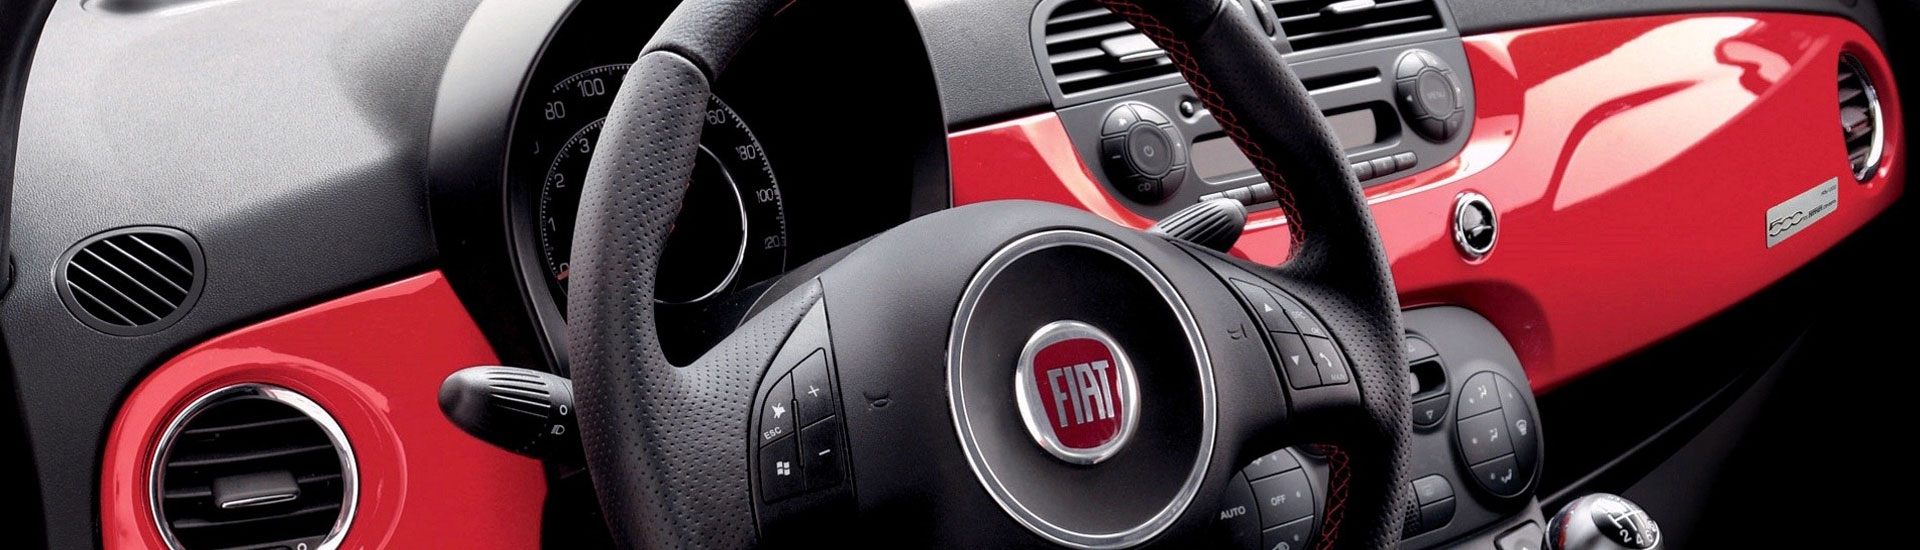 2018 Fiat 500x Custom Dash Kits